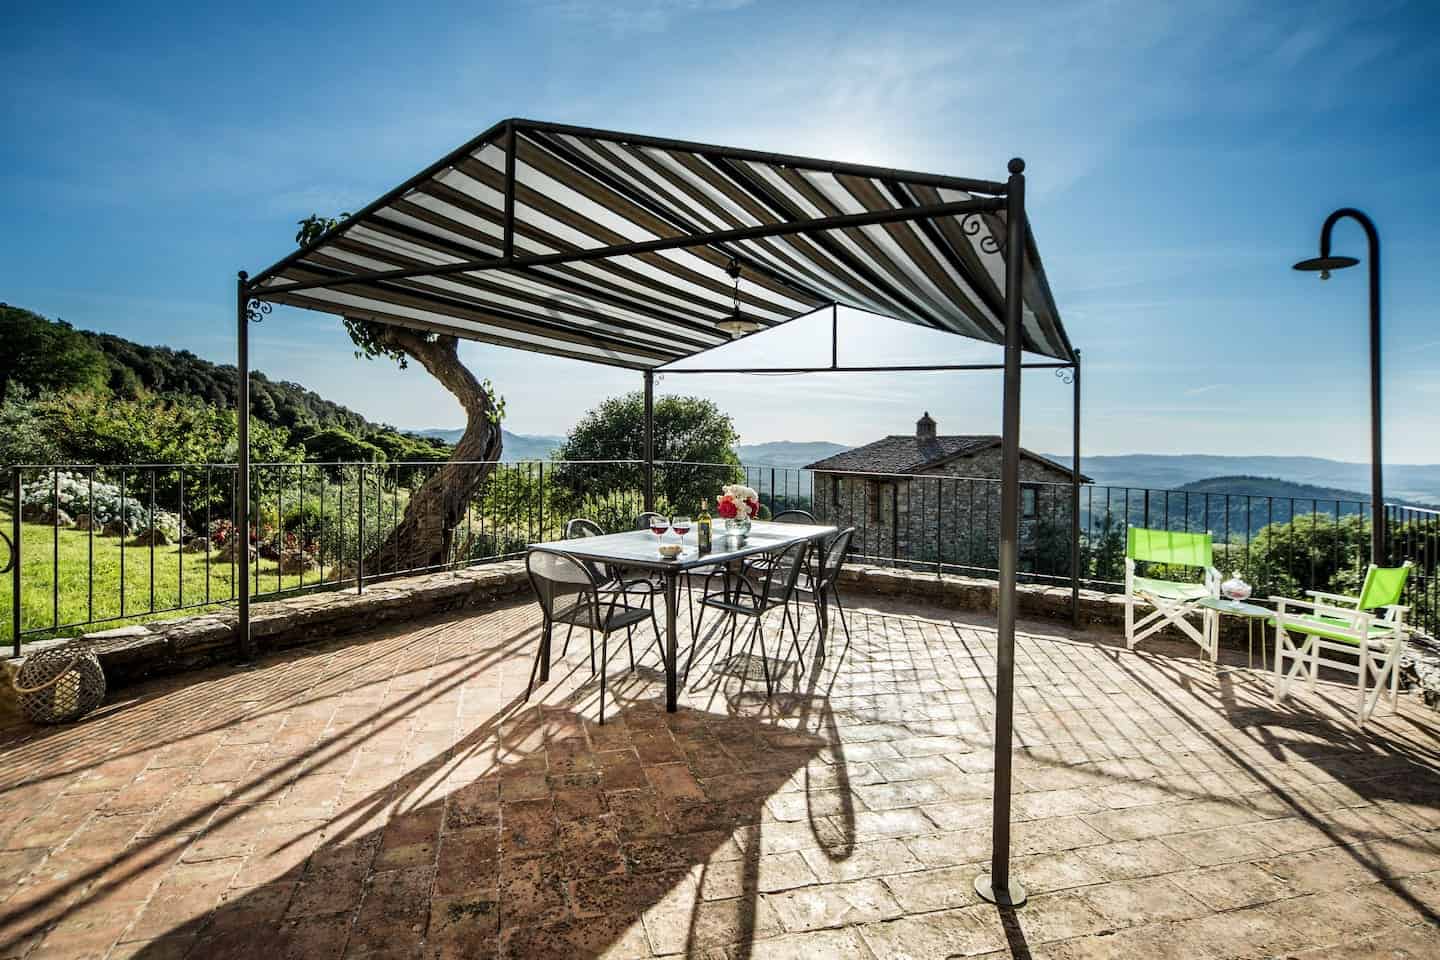 Image of Airbnb rental in Siena, Italy